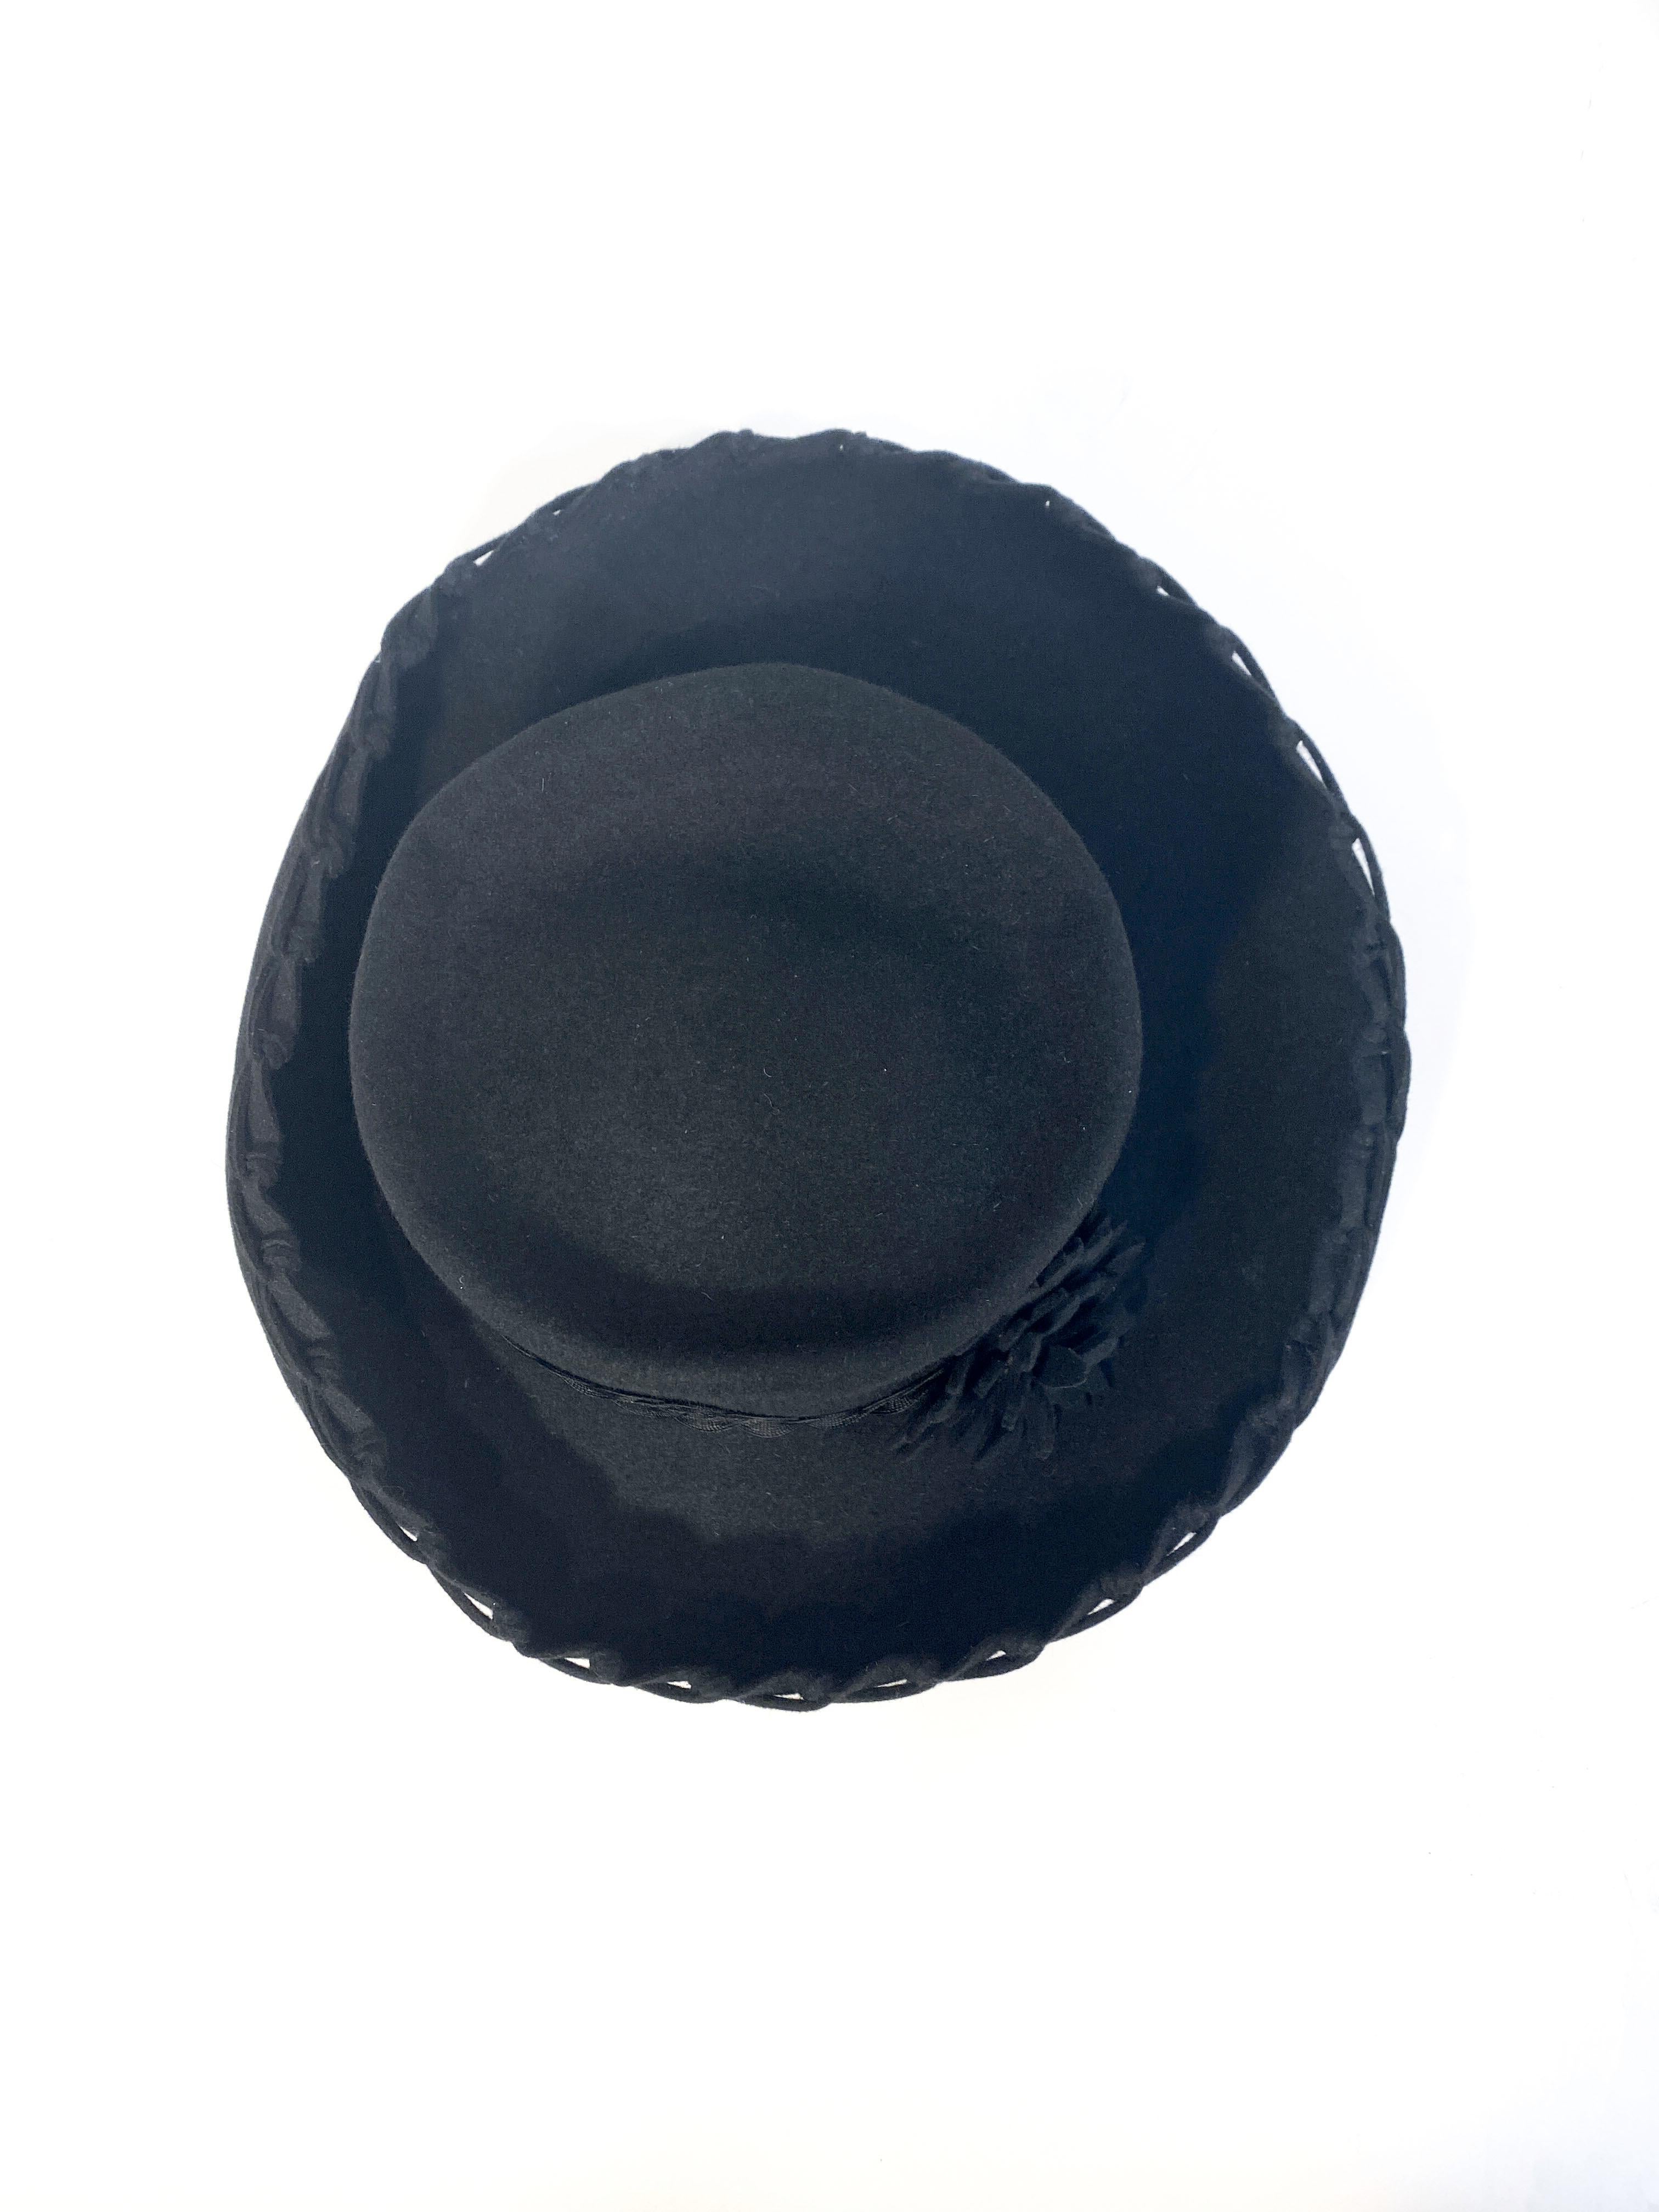 Women's or Men's 1940s Black Cashmere Feminine Pork Pie Hat